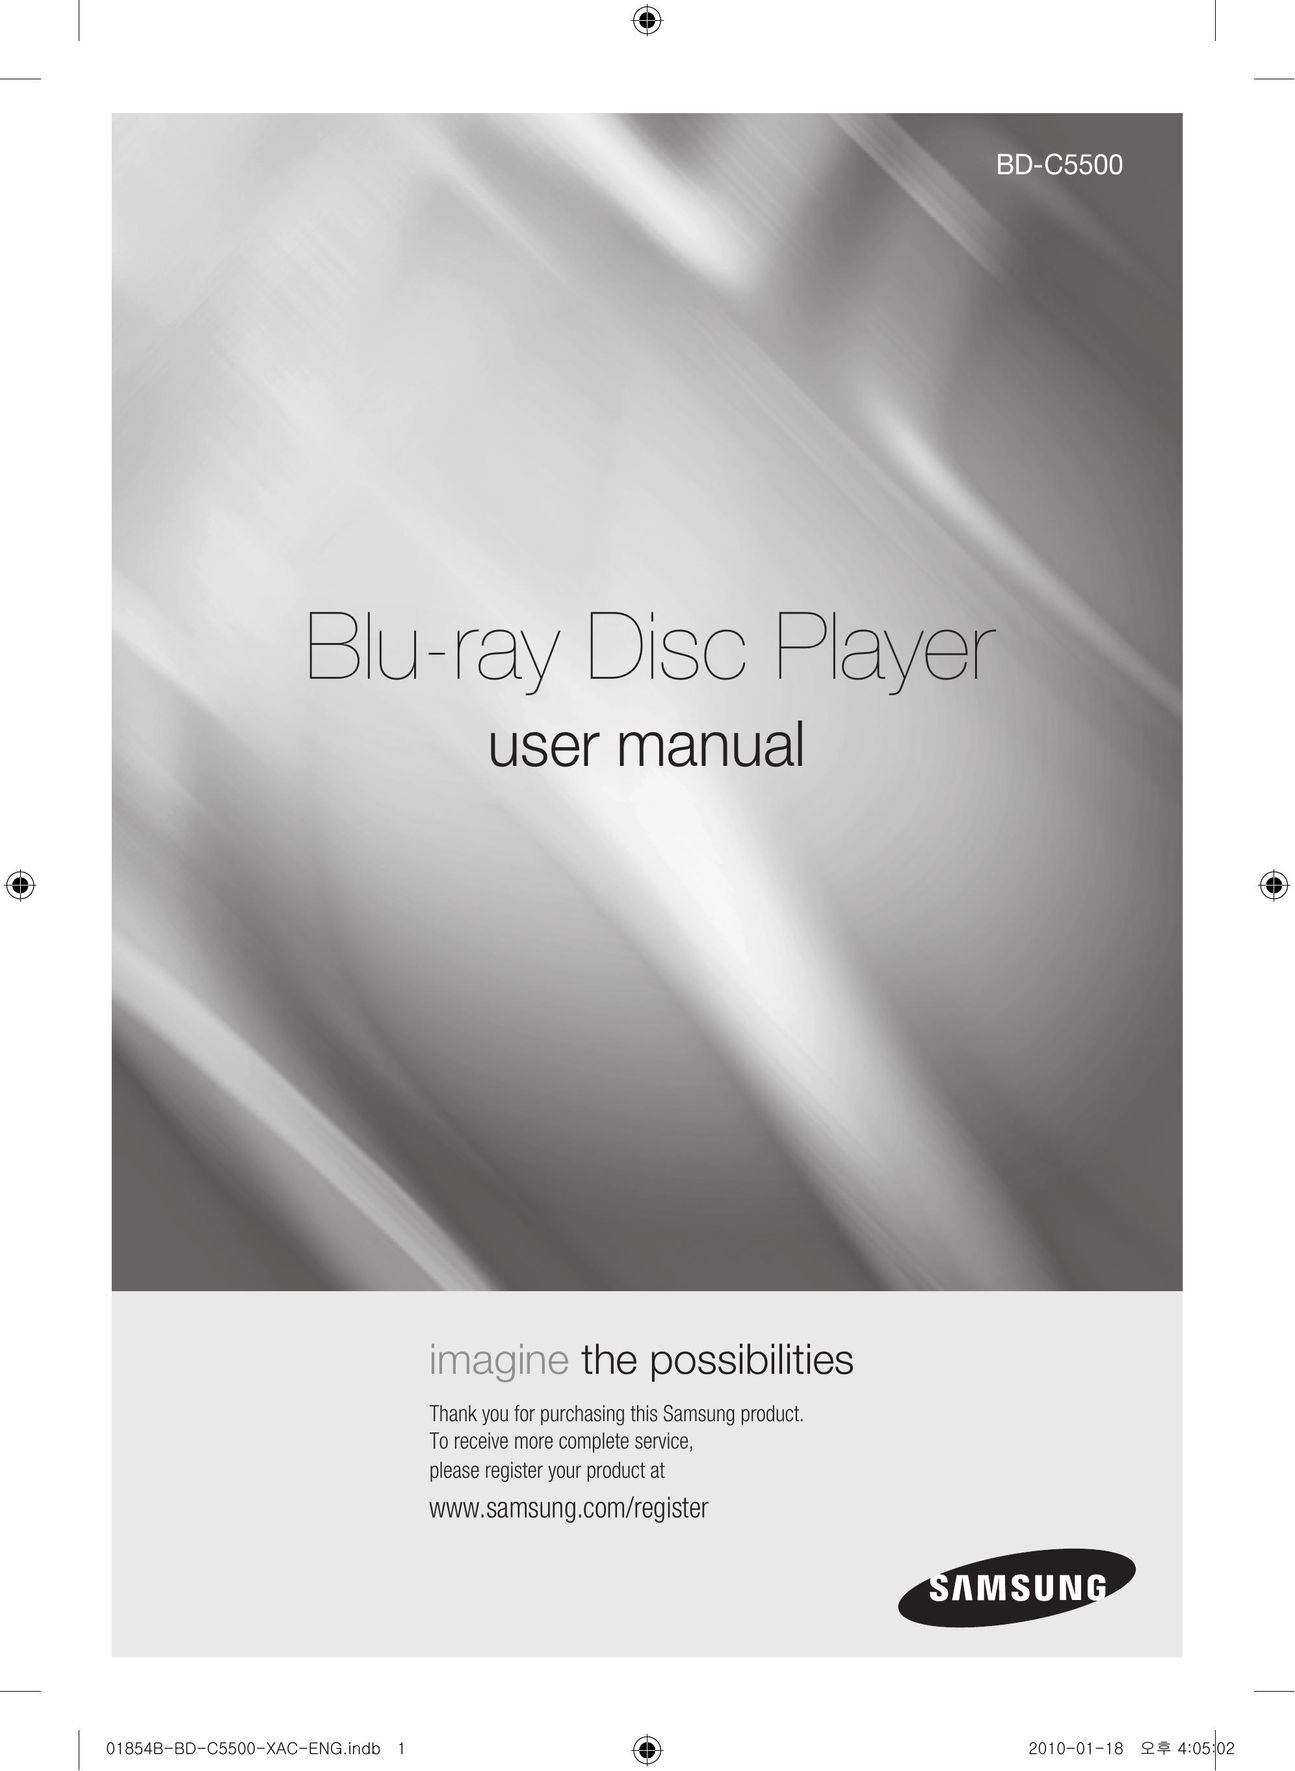 Samsung BD-C5500T Blu-ray Player User Manual